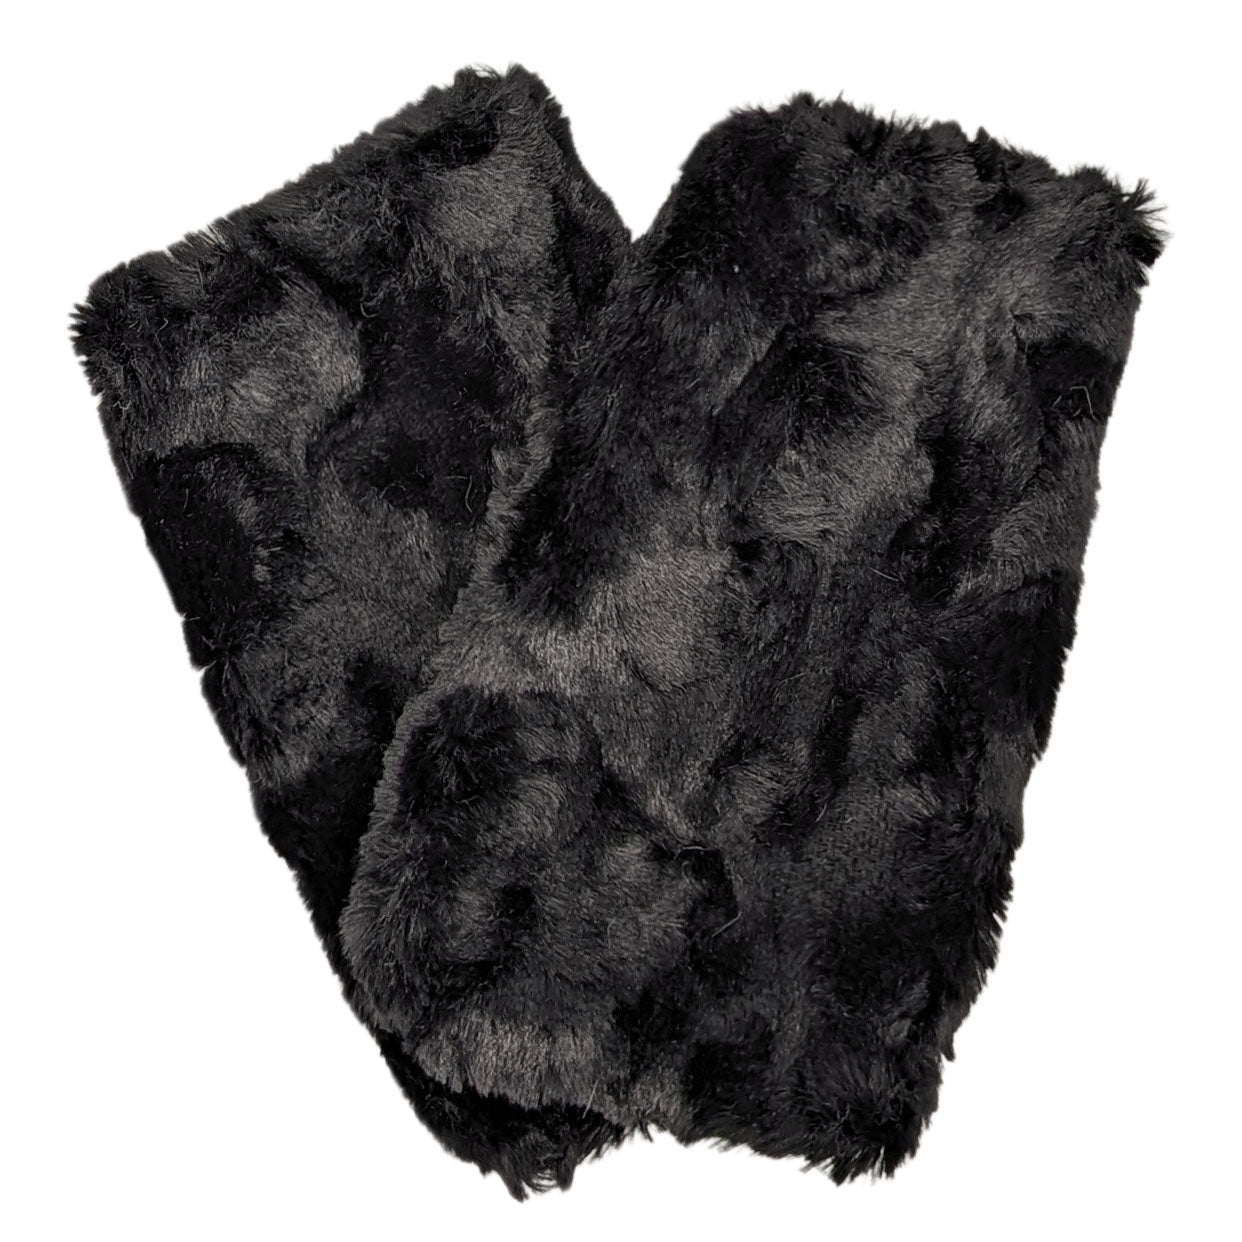 Men's Fingerless Gloves | Cuddly Faux Fur in Black | Handmade by Pandemonium Millinery Seattle, WA USA